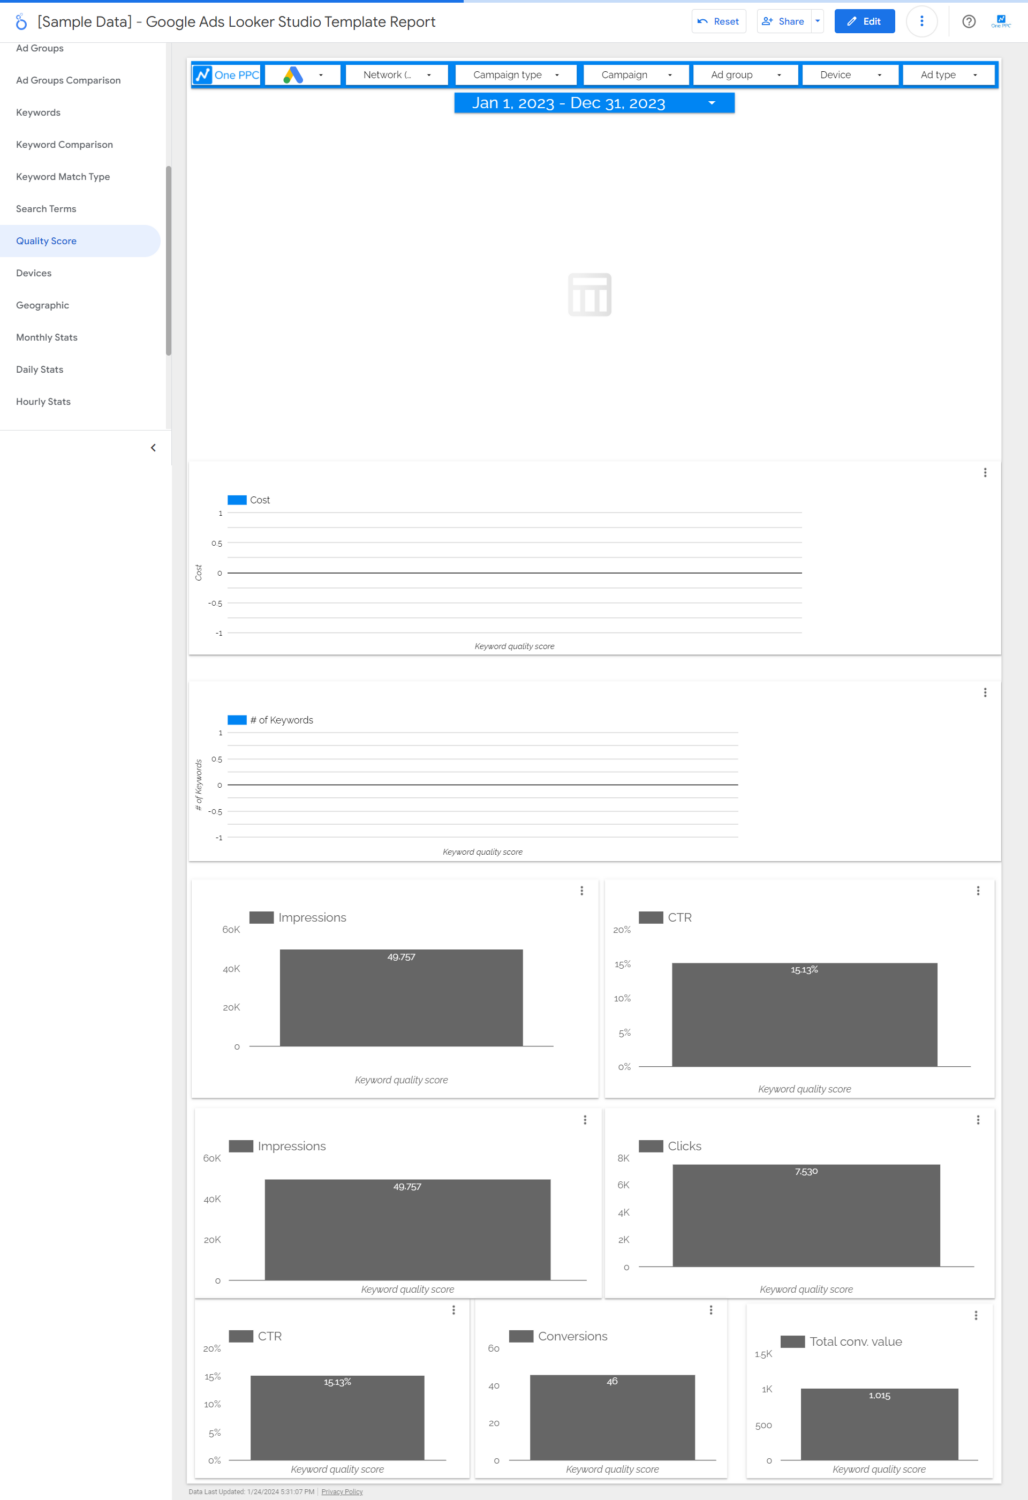 Google Ads Looker Studio Template Report - 9 Quality Score